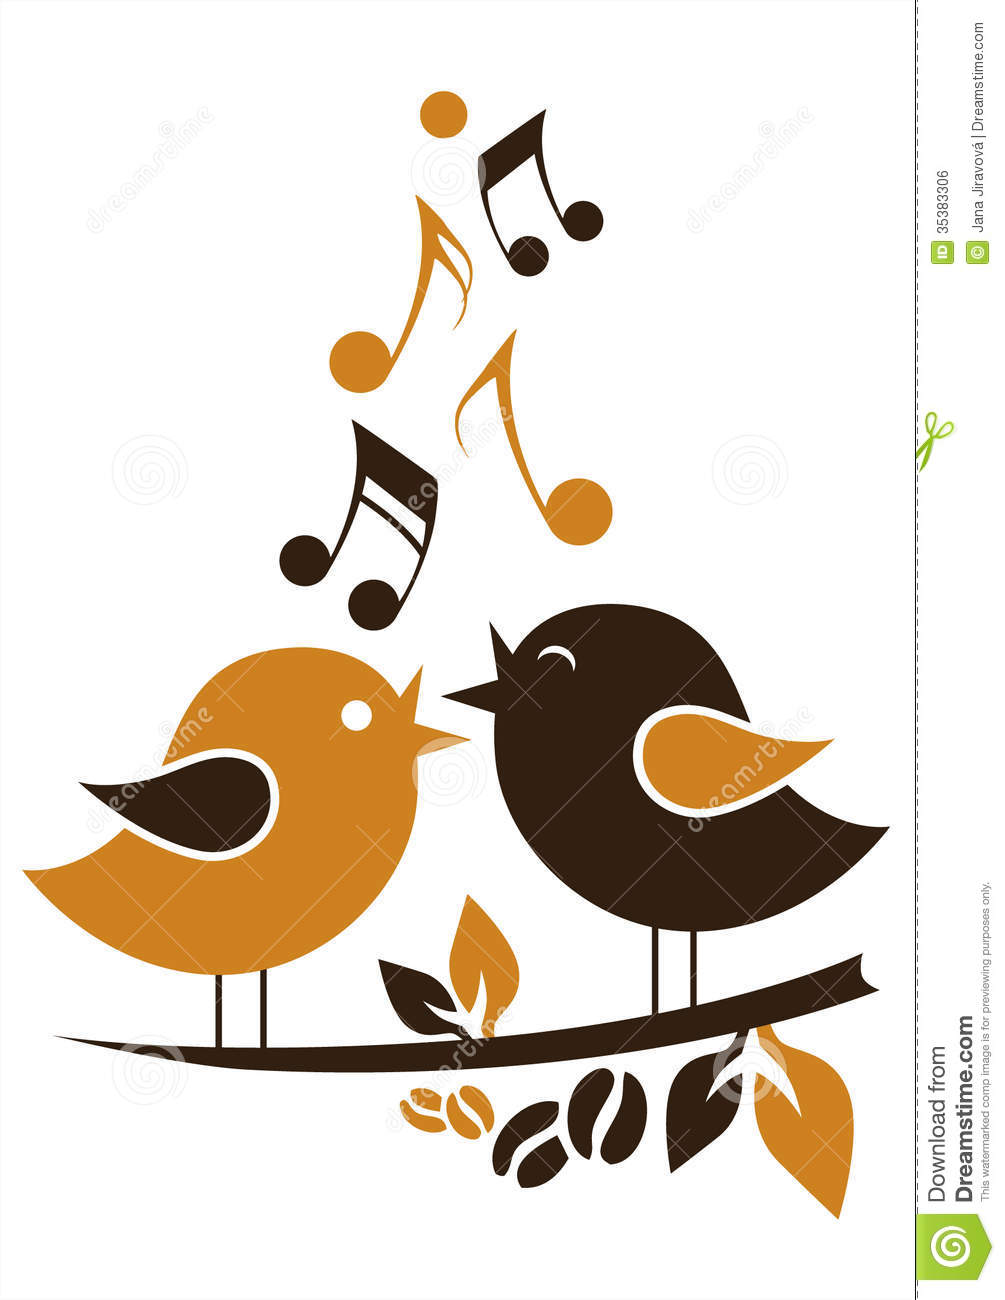 Cartoon Singing Birds Royalty Free Stock Image   Image  35383306